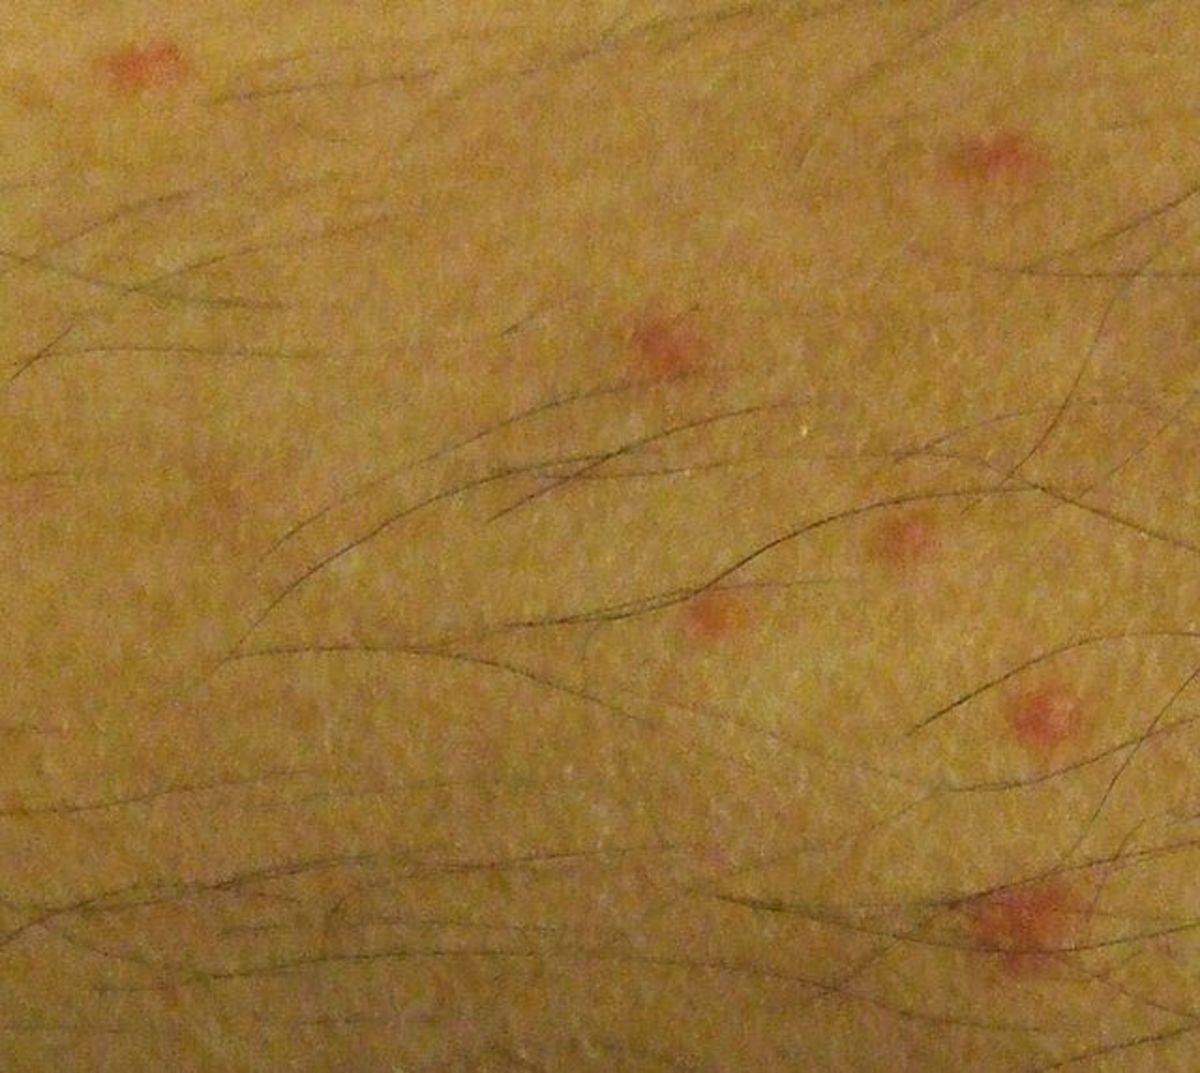 Flea Bites on Humans: Symptoms, Treatment, and More